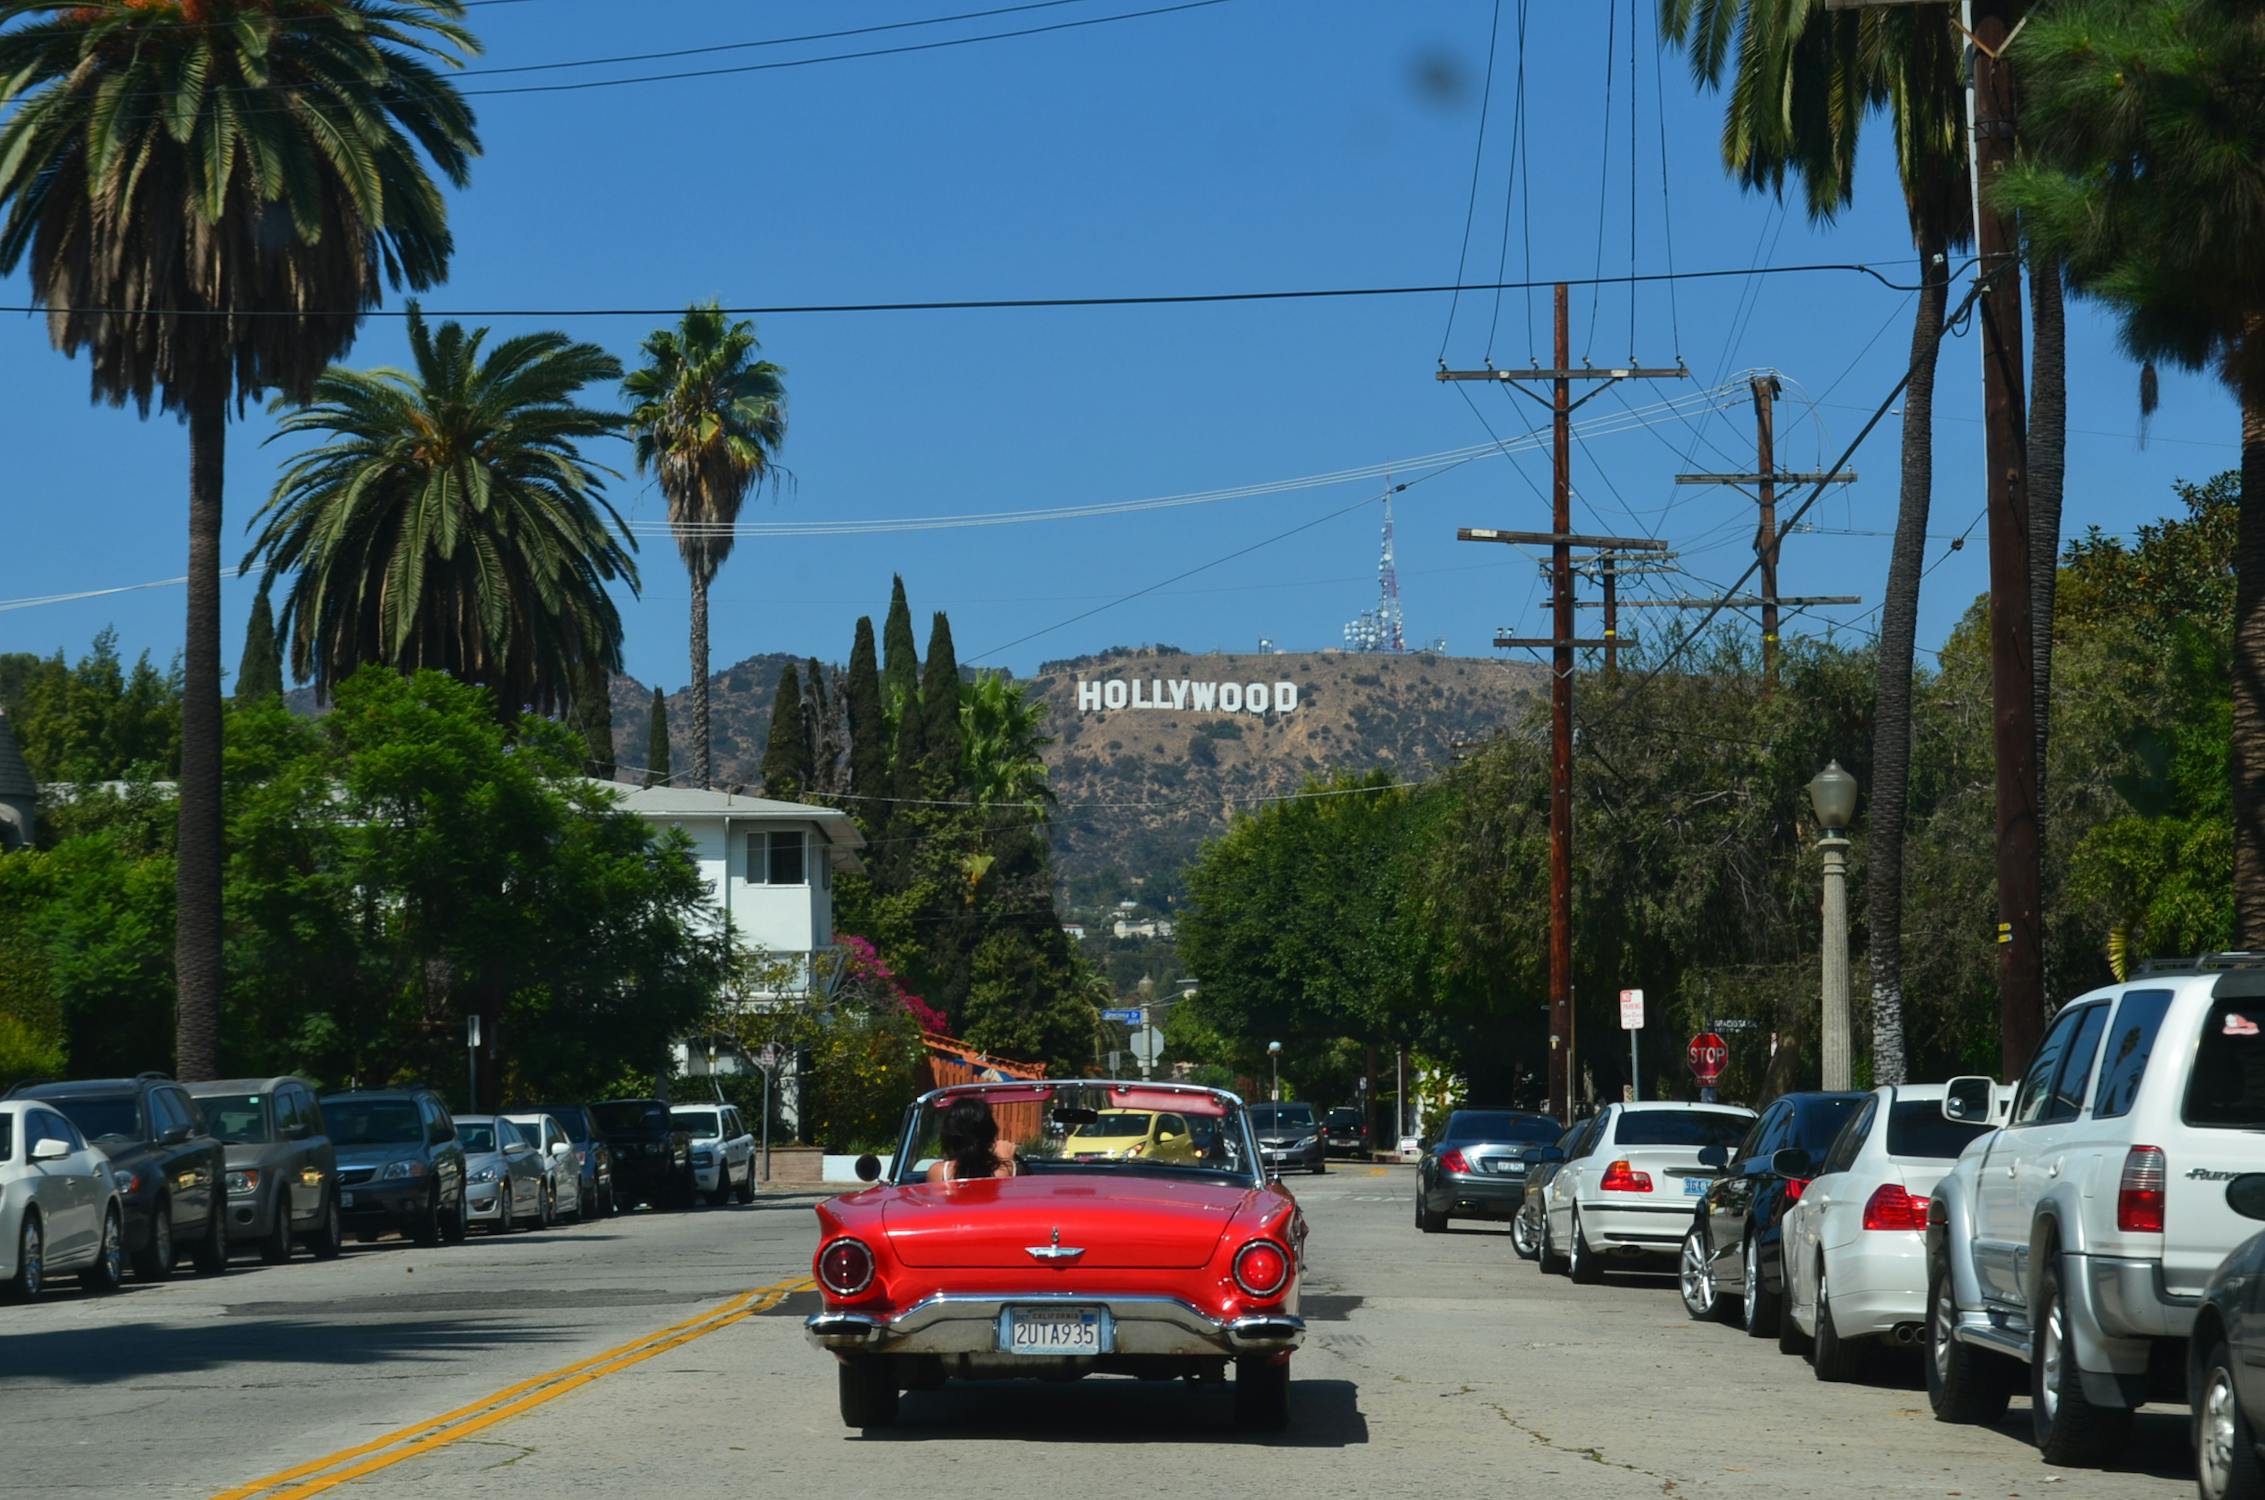 Vintage car going down Hollywood blvd. Img Via Pexels